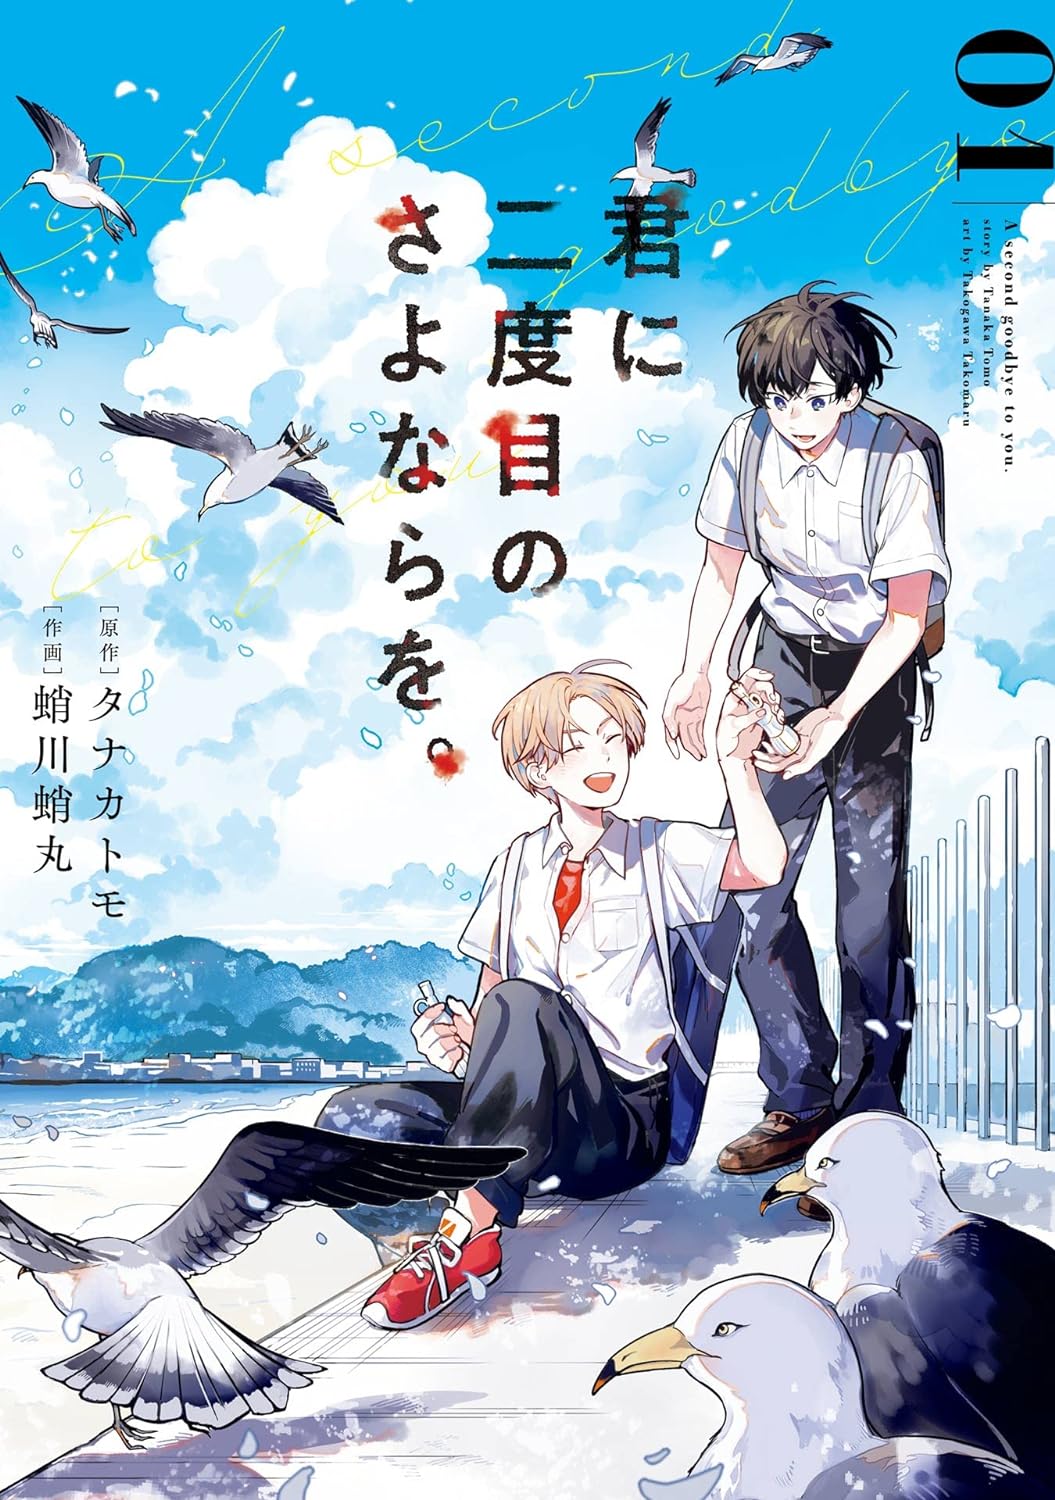 Buy sayonara zetsubo sensei - 163992 | Premium Anime Poster |  Animeprintz.com